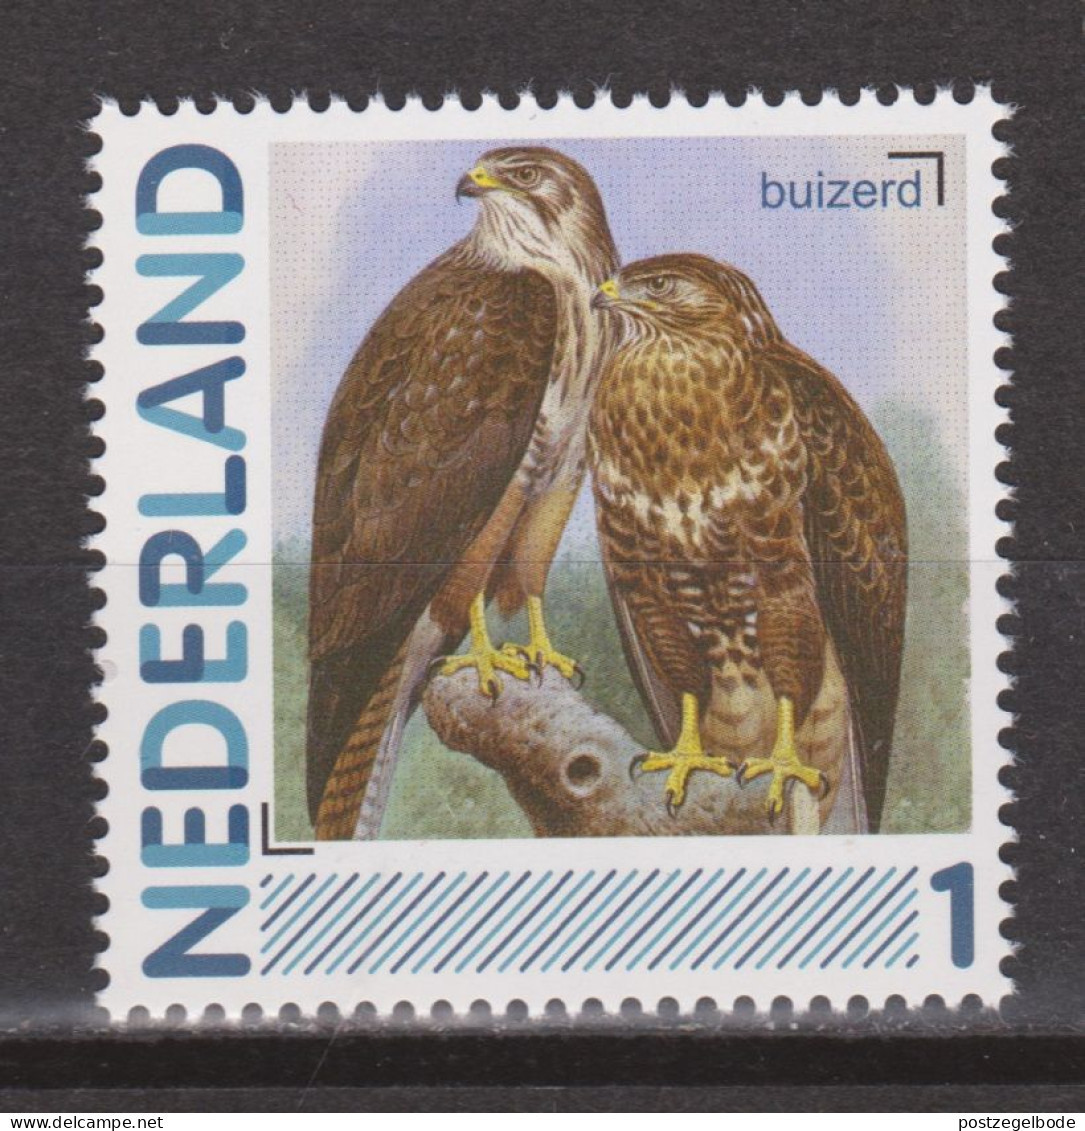 Nederland Netherlands Pays Bas MNH Roofvogel Oiseau De Proie Ave De Rapina Bird Of Prey Buizerd Buzzard Buse Ratonero - Adler & Greifvögel